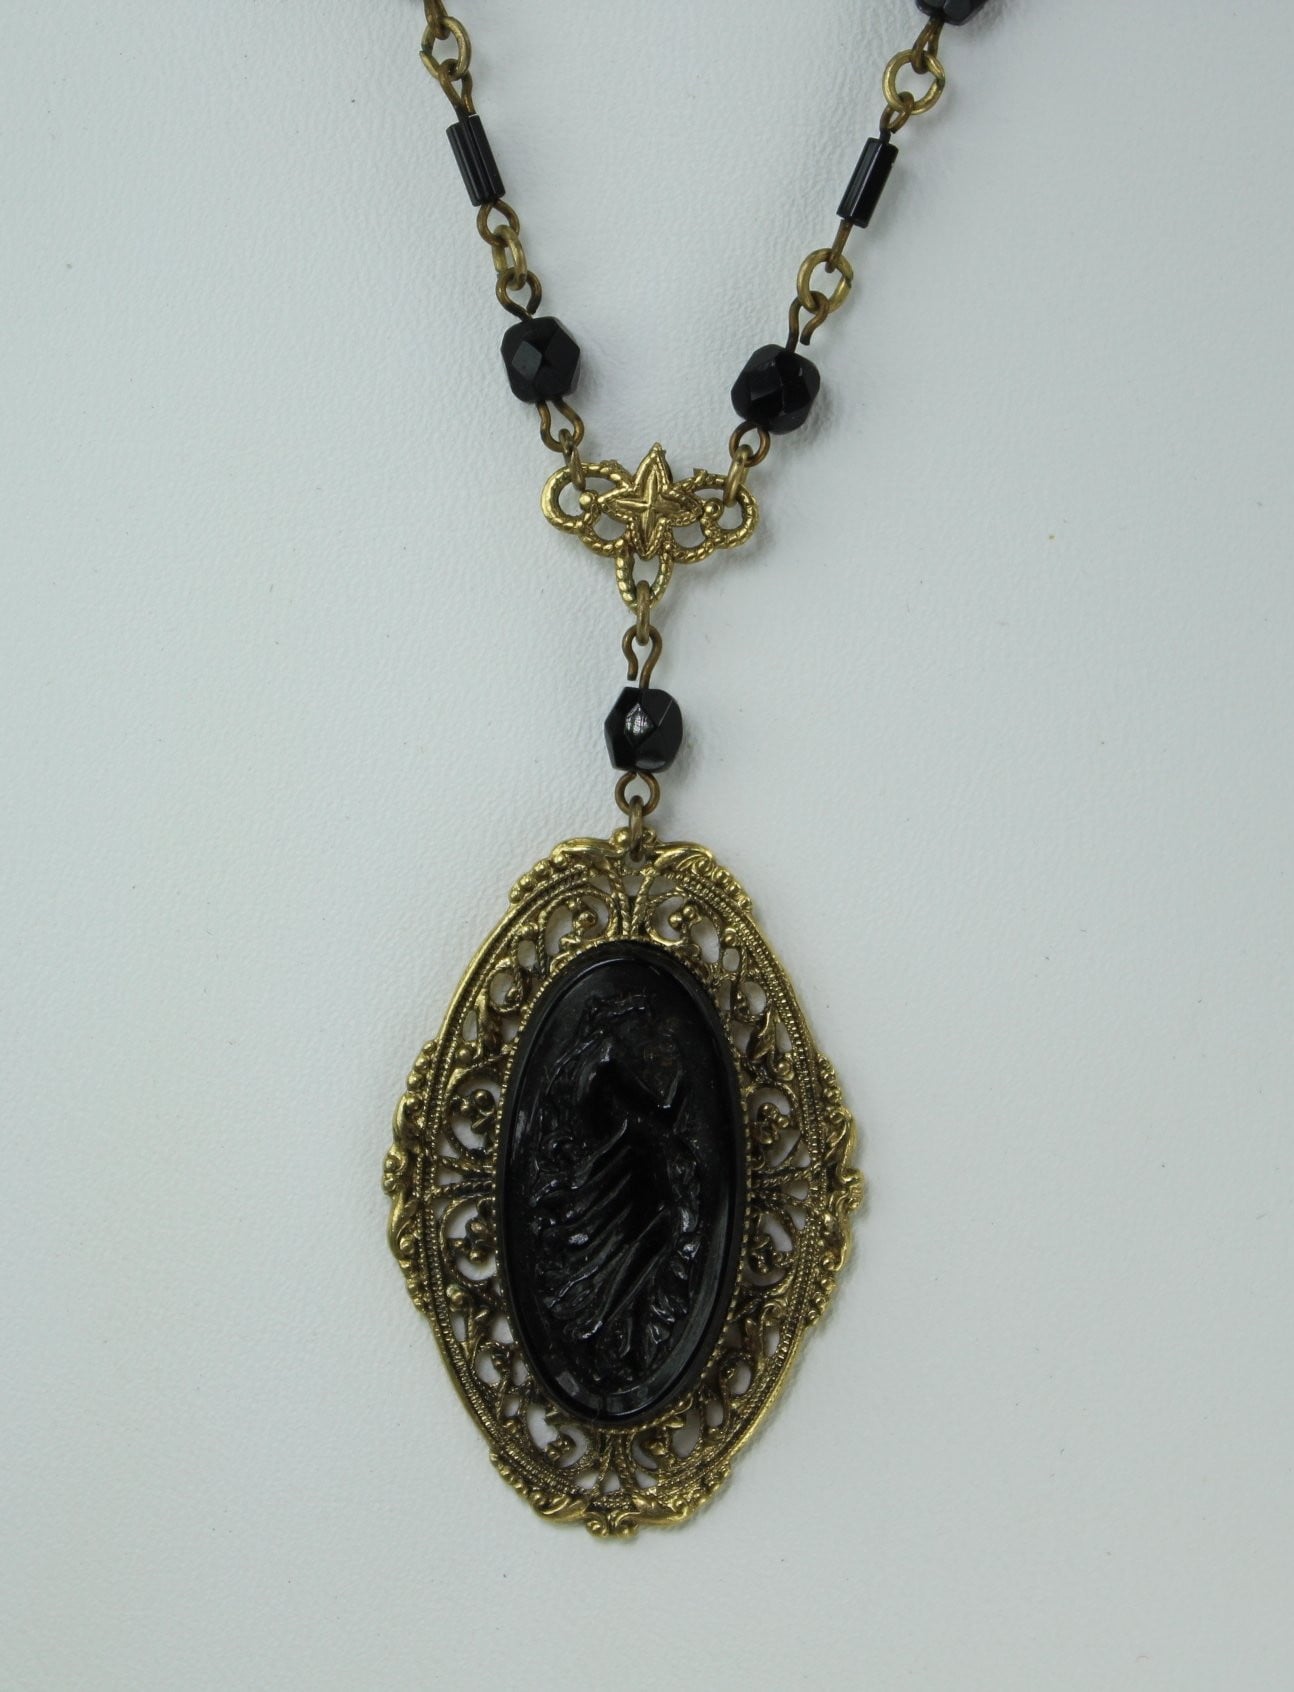 Filigree Necklace "1928" Maker Black Pendant Figure Victorian Style Repro mourning